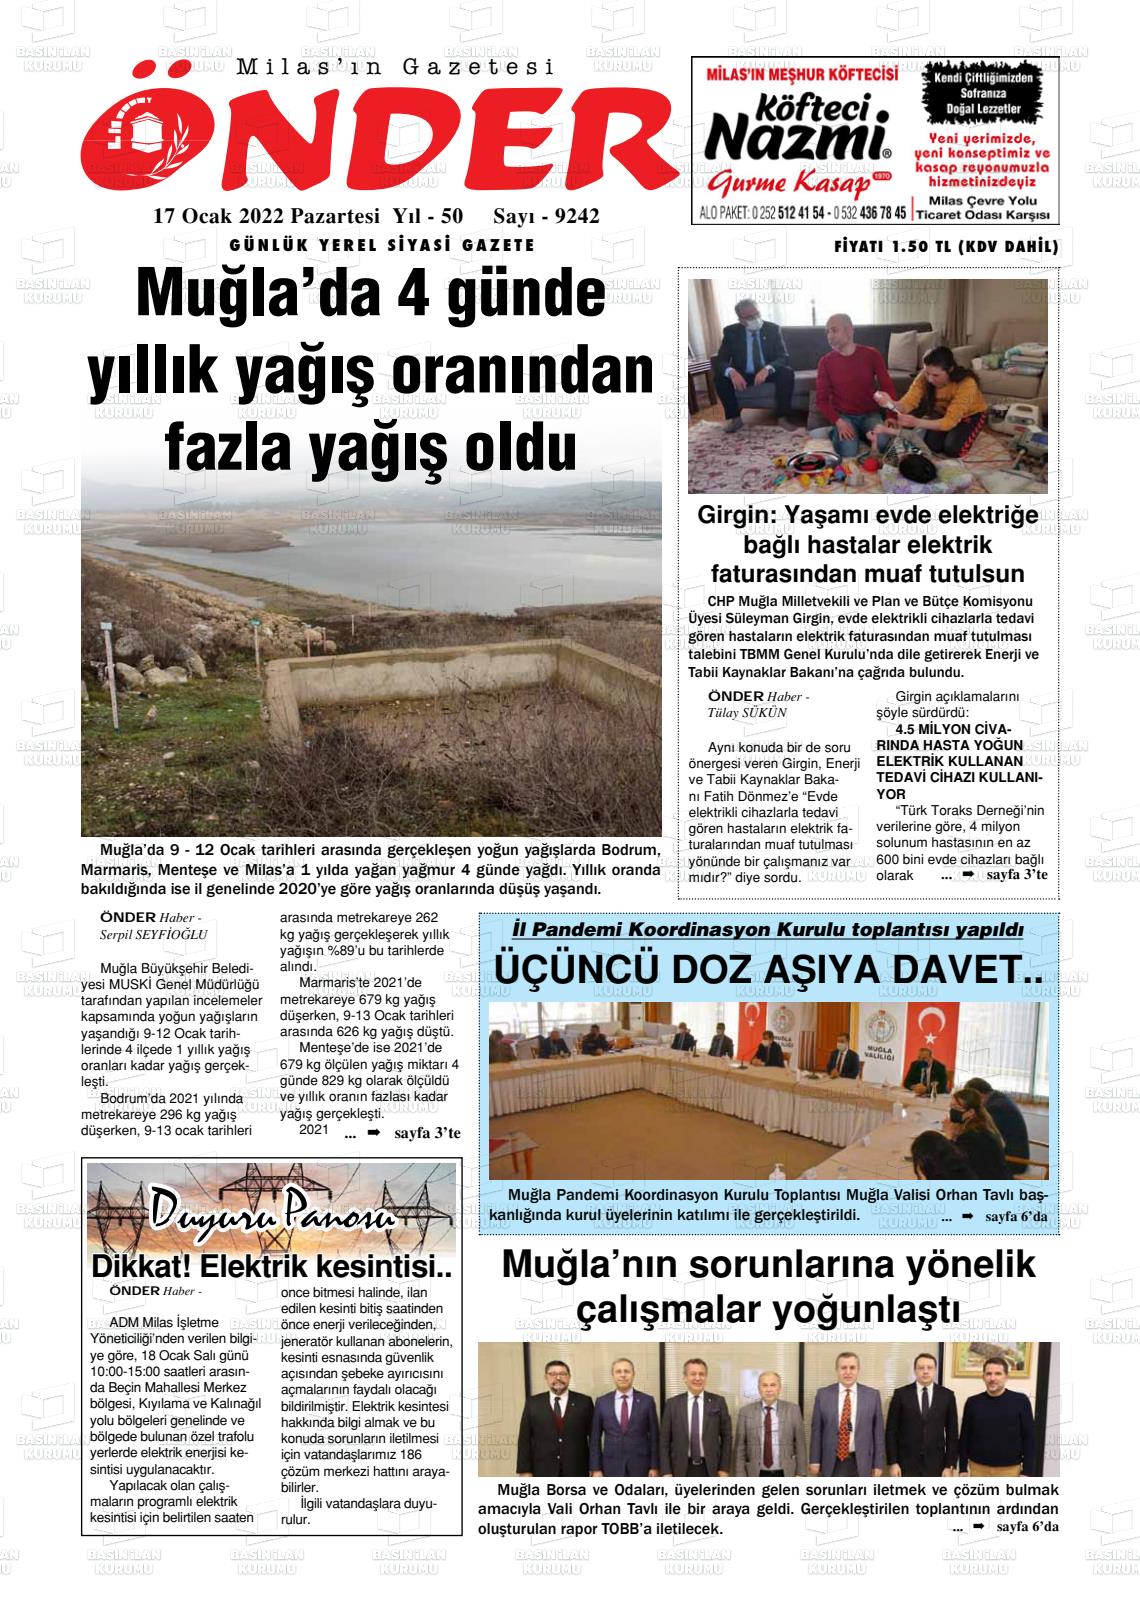 17 Ocak 2022 Milas Önder Gazete Manşeti